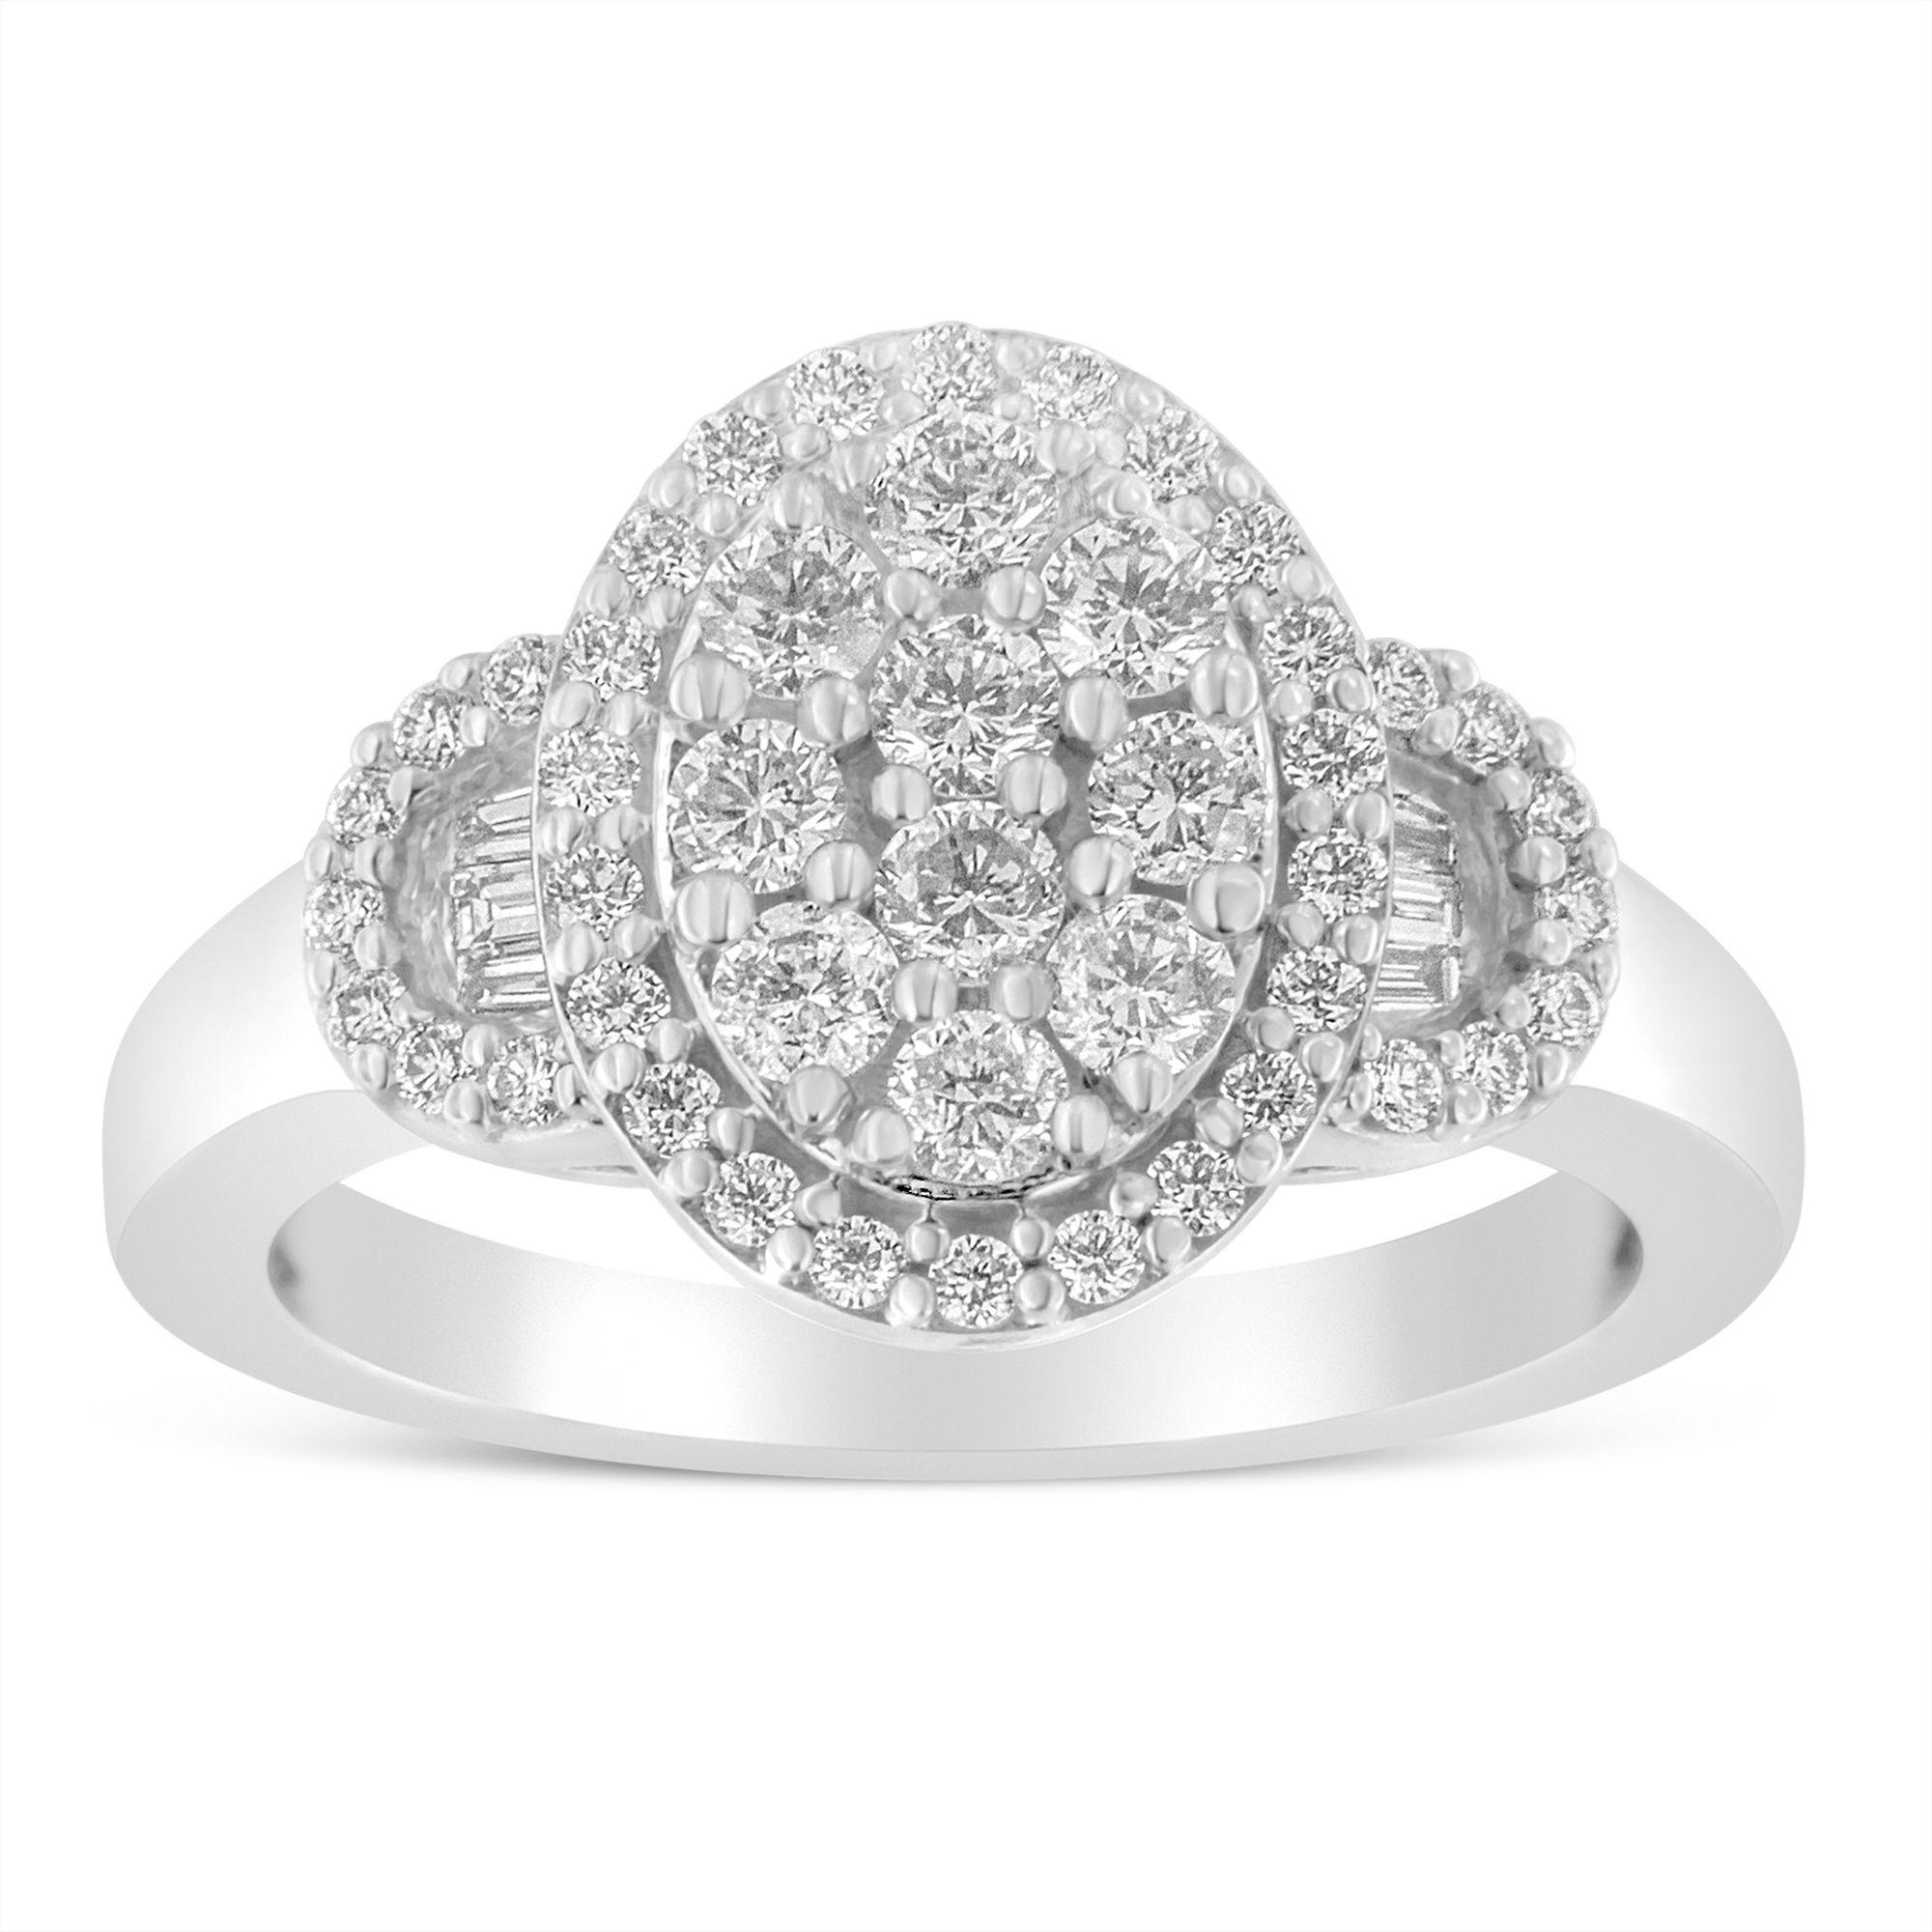 For Sale:  10K White Gold 1.0 Carat Diamond Cluster Ring 3